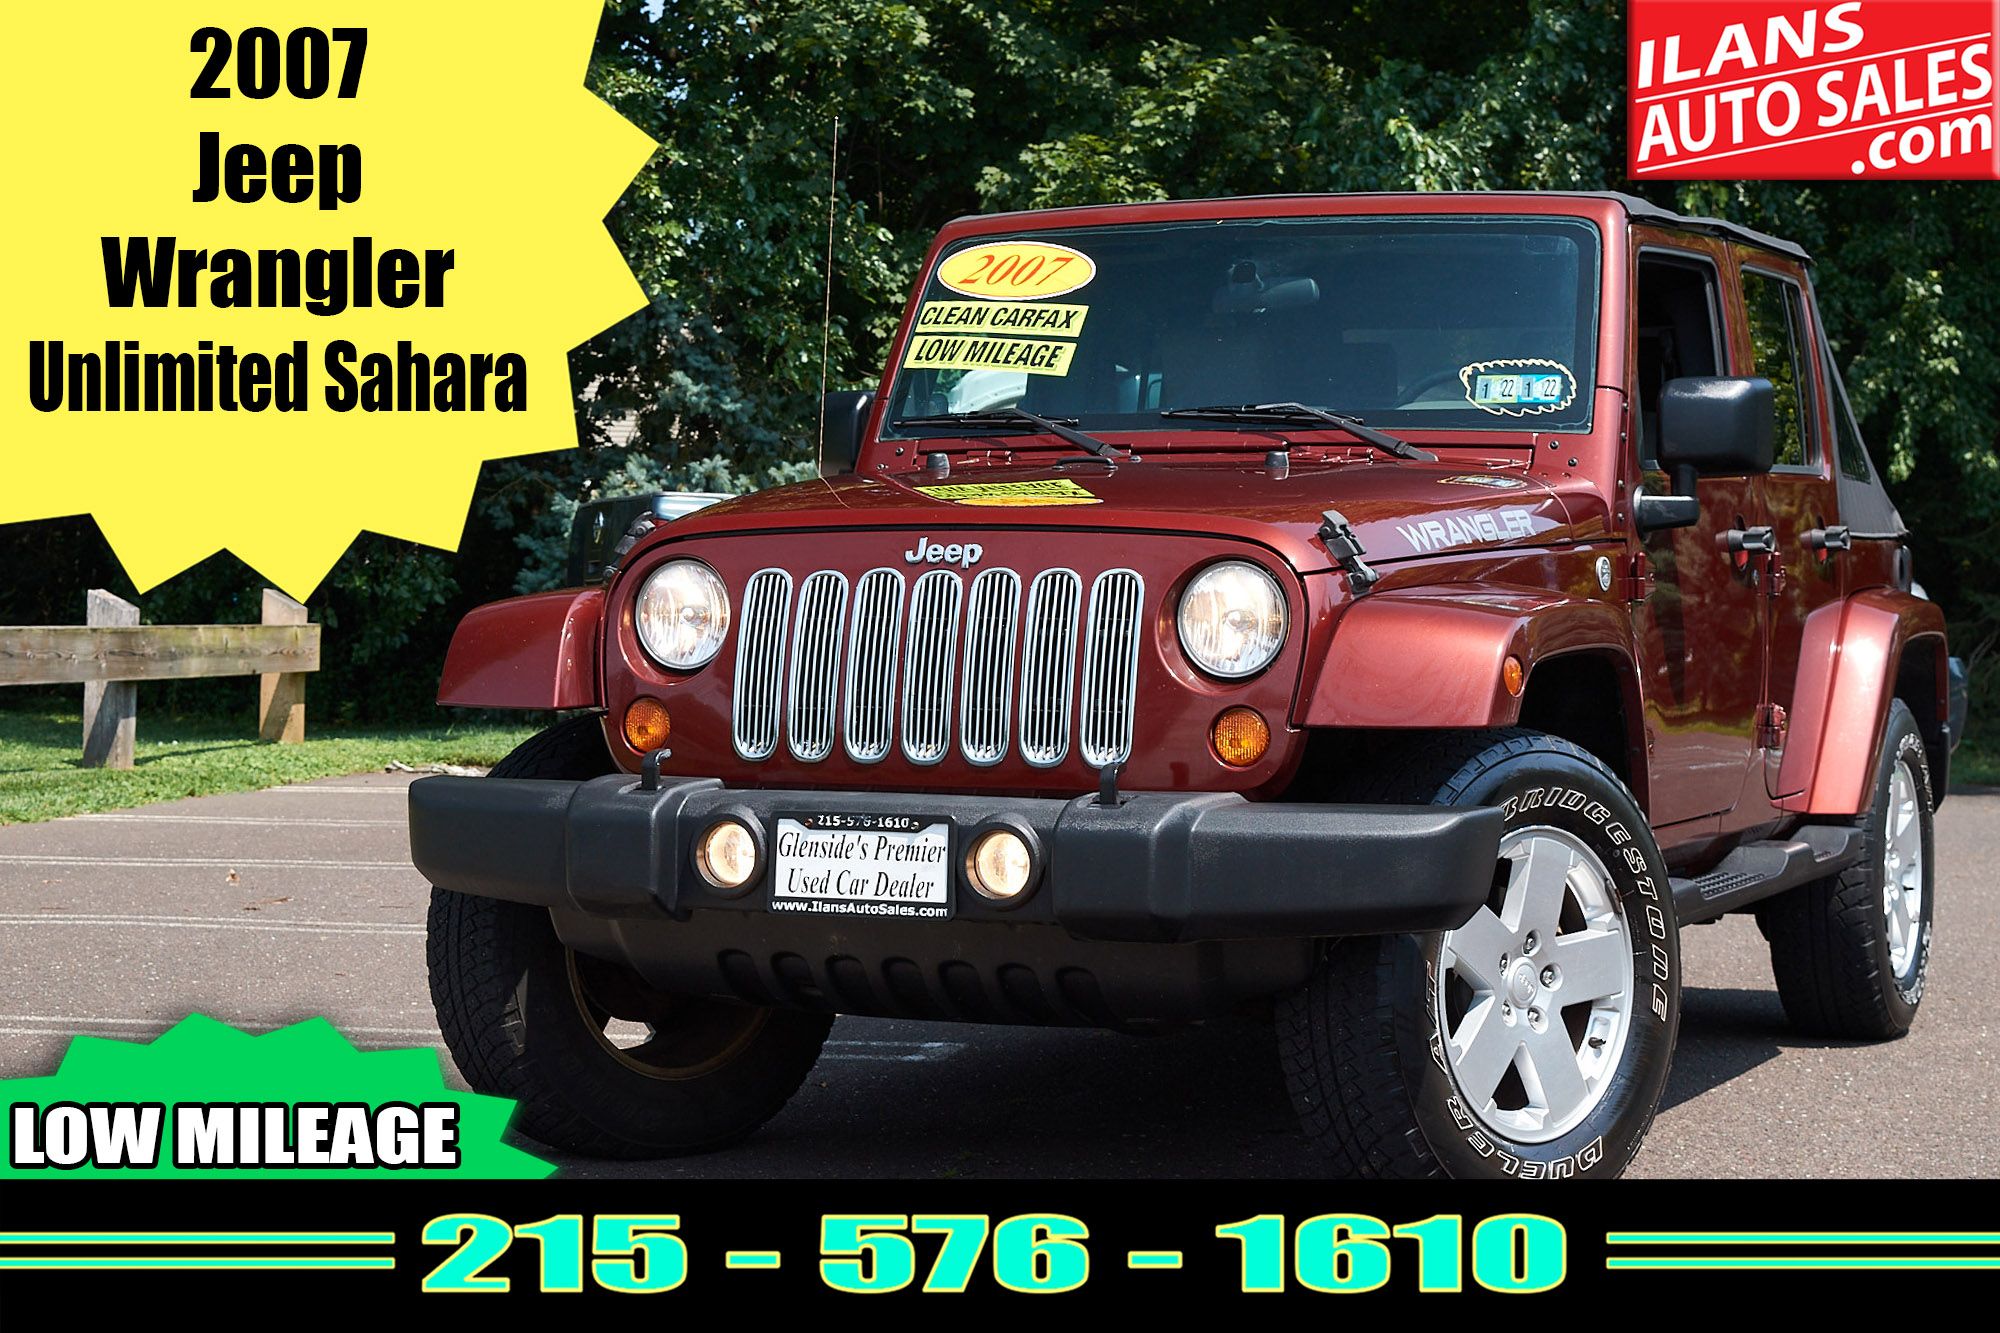 Used Jeep Wrangler for Sale in Ashland, NJ Under $99,959 